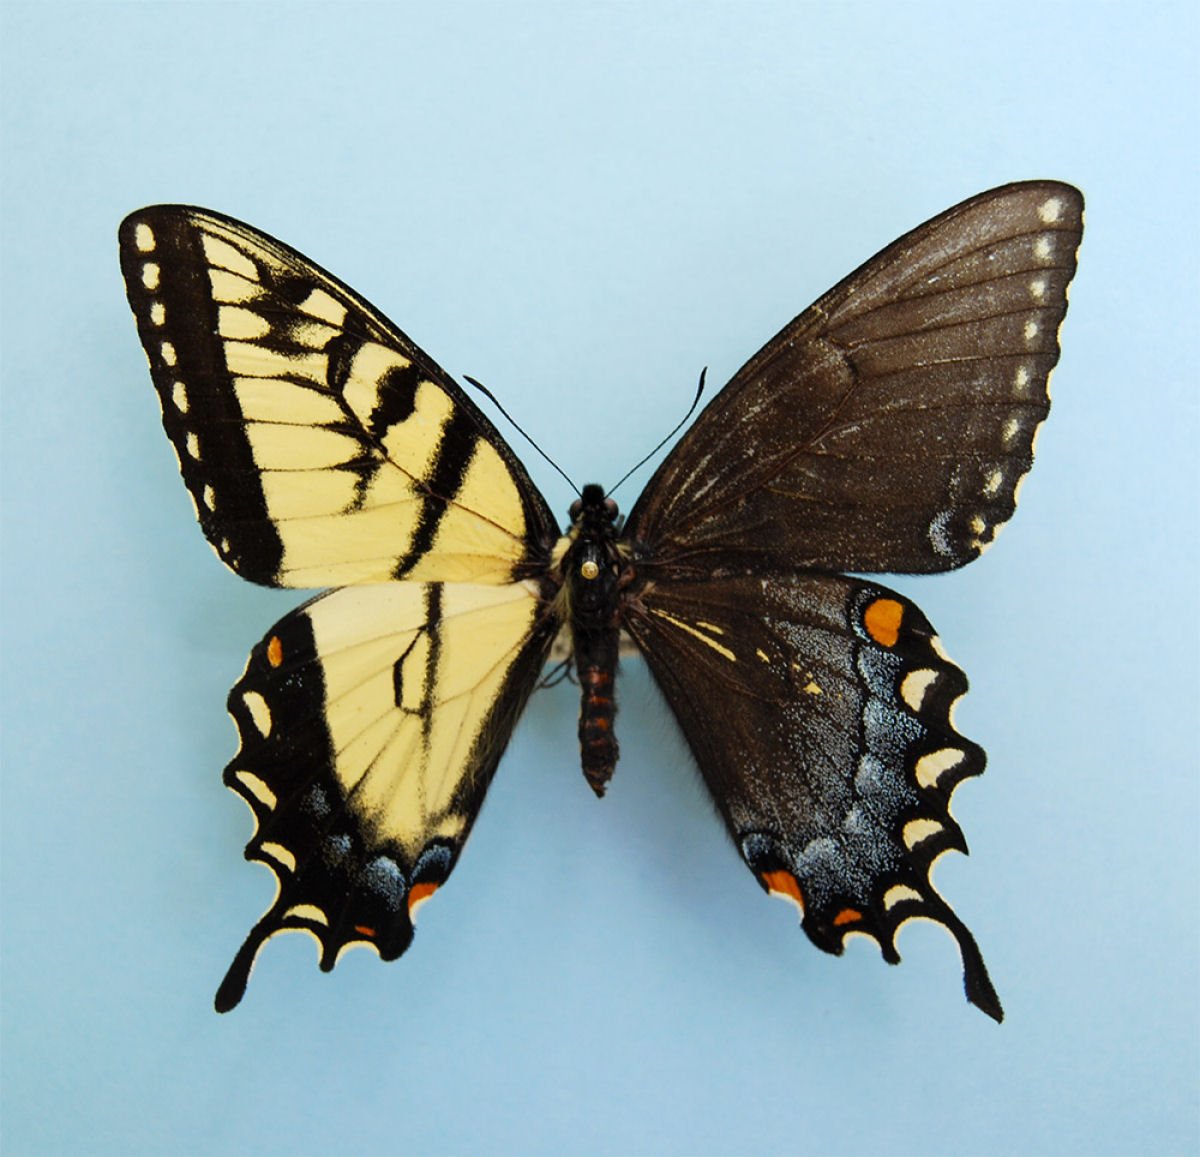 Разные крылья бабочек. Бабочка Хвостоносец. Хвостоносец Маака. Бабочки гинандроморфы. Кардинал-гинандроморф.